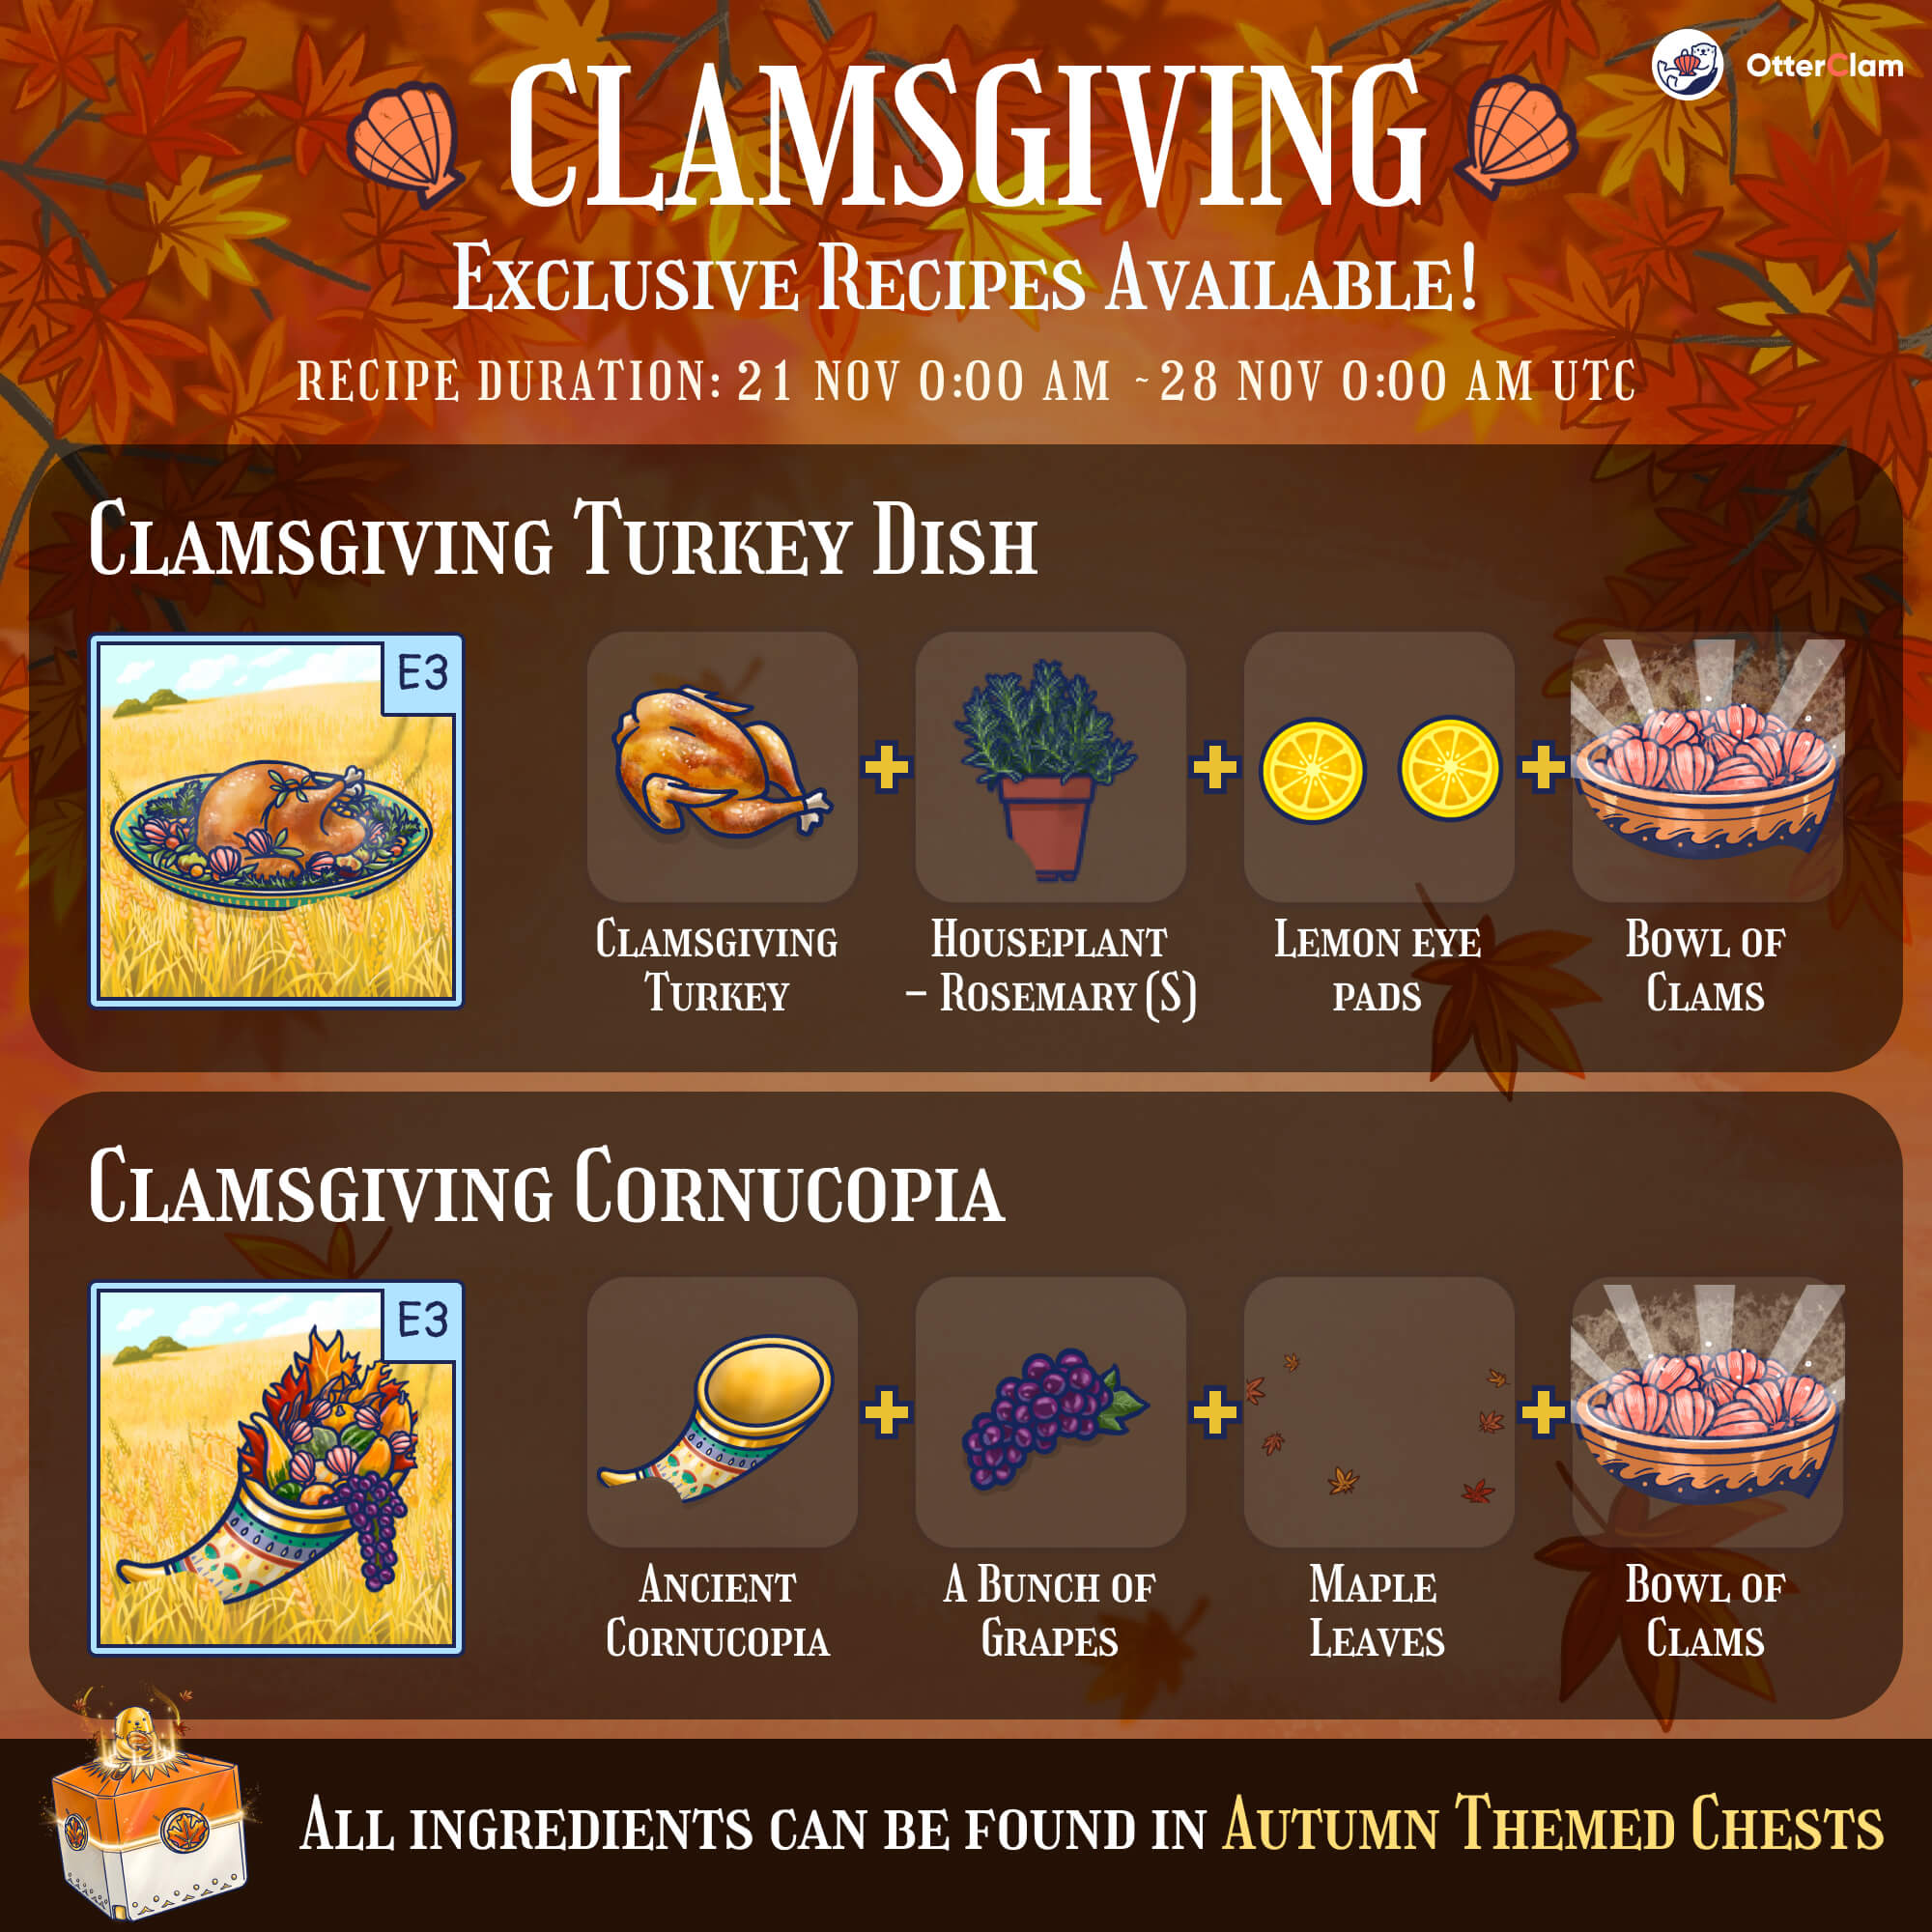 Clamsgiving recipe